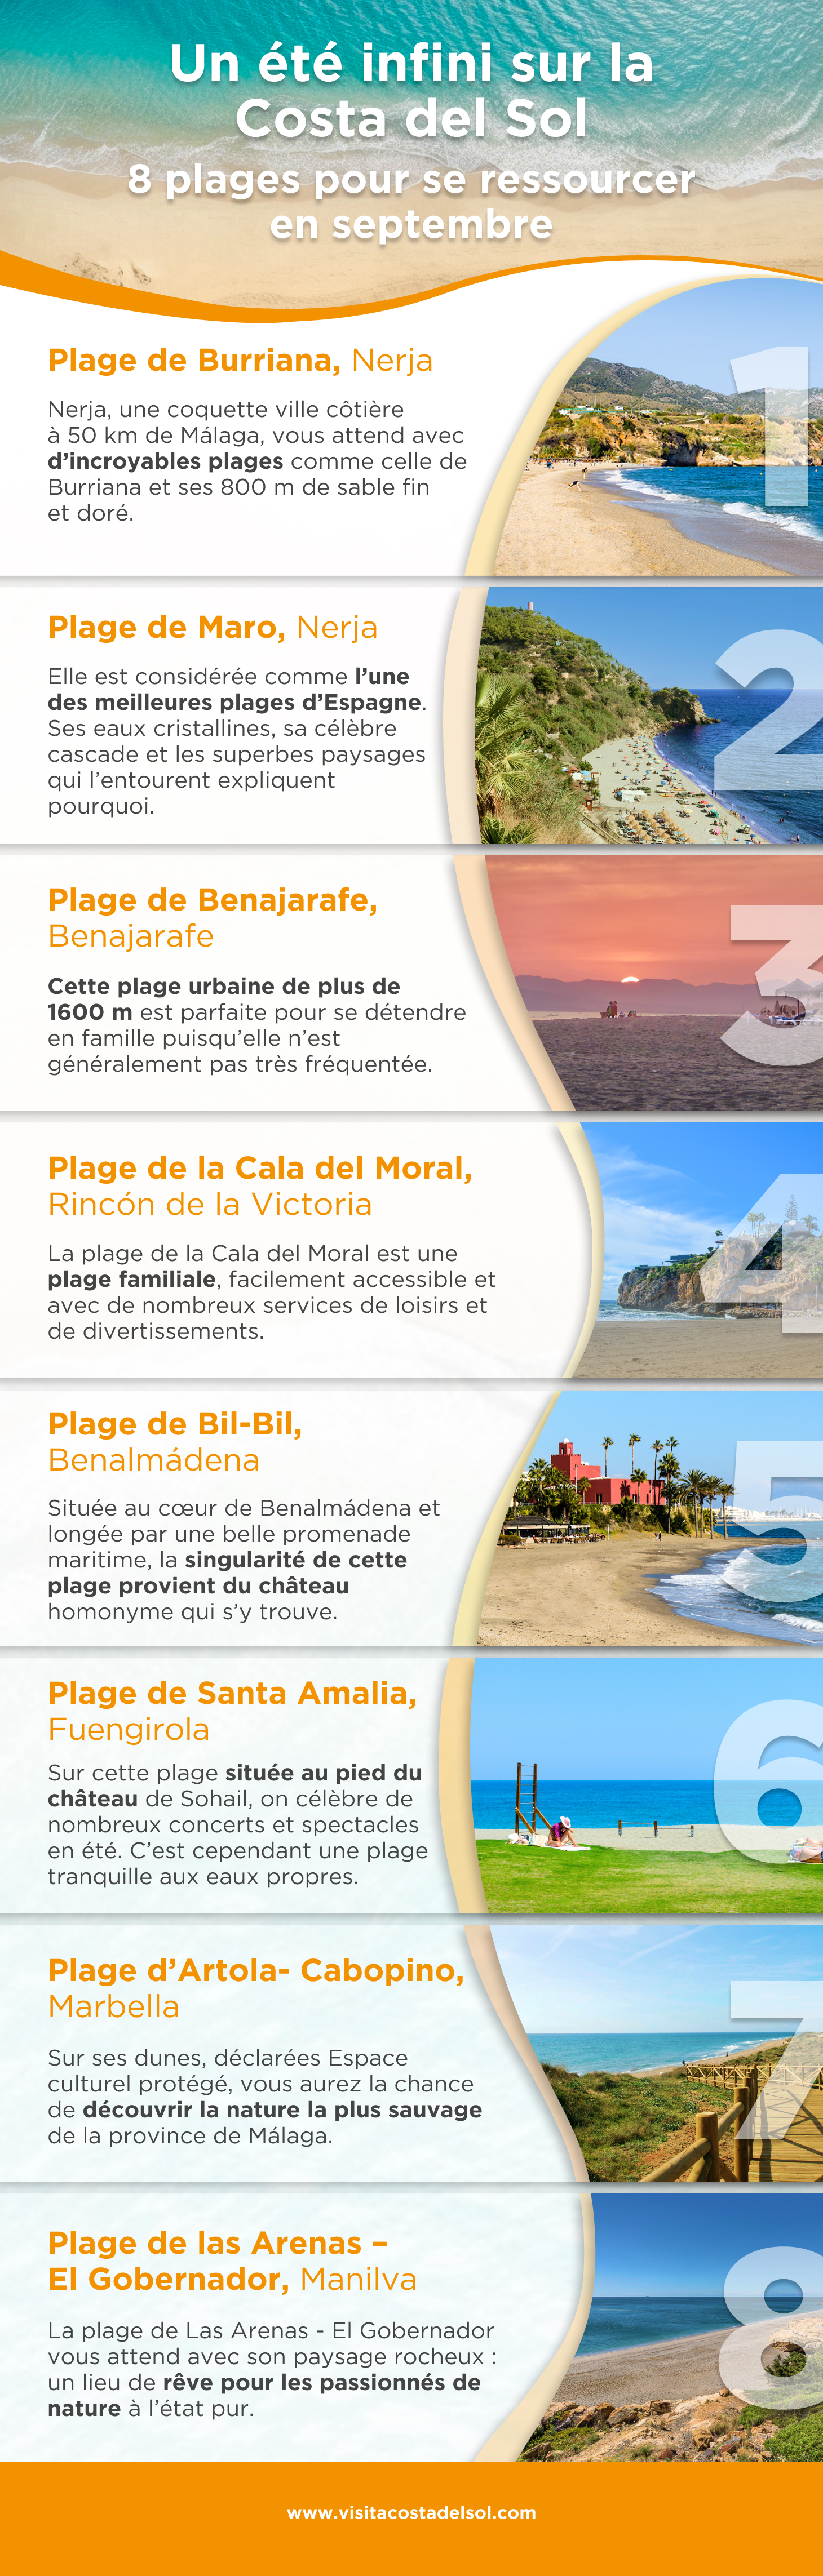 csol_infografia_8 playas septiembre_FR